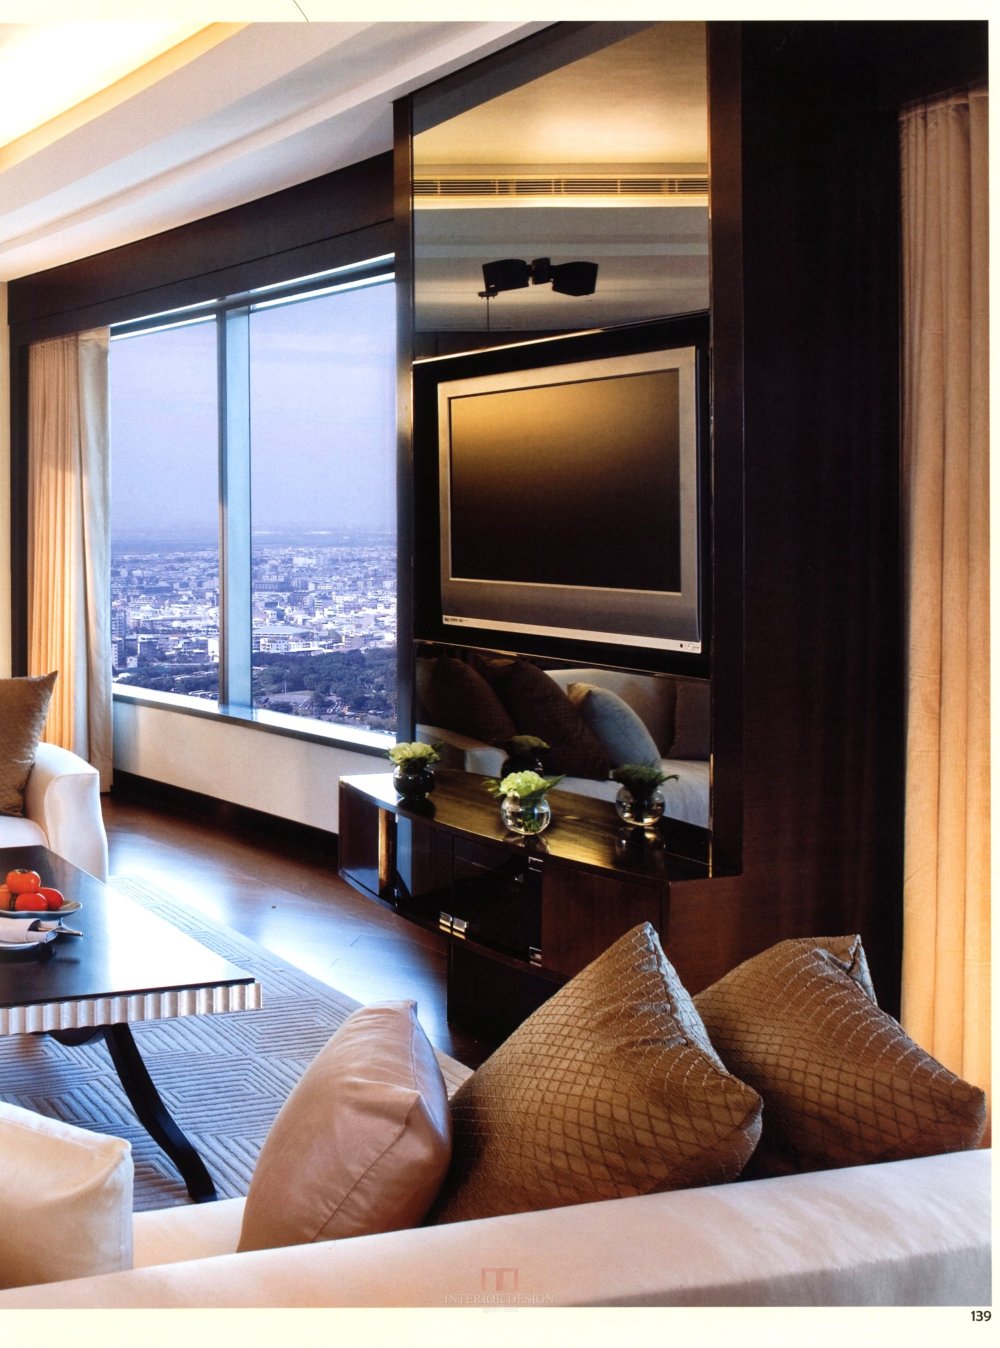 101全球酒店客房 101HOTELS GUEST ROOMS_图站_AiJpgg_com_134.jpg